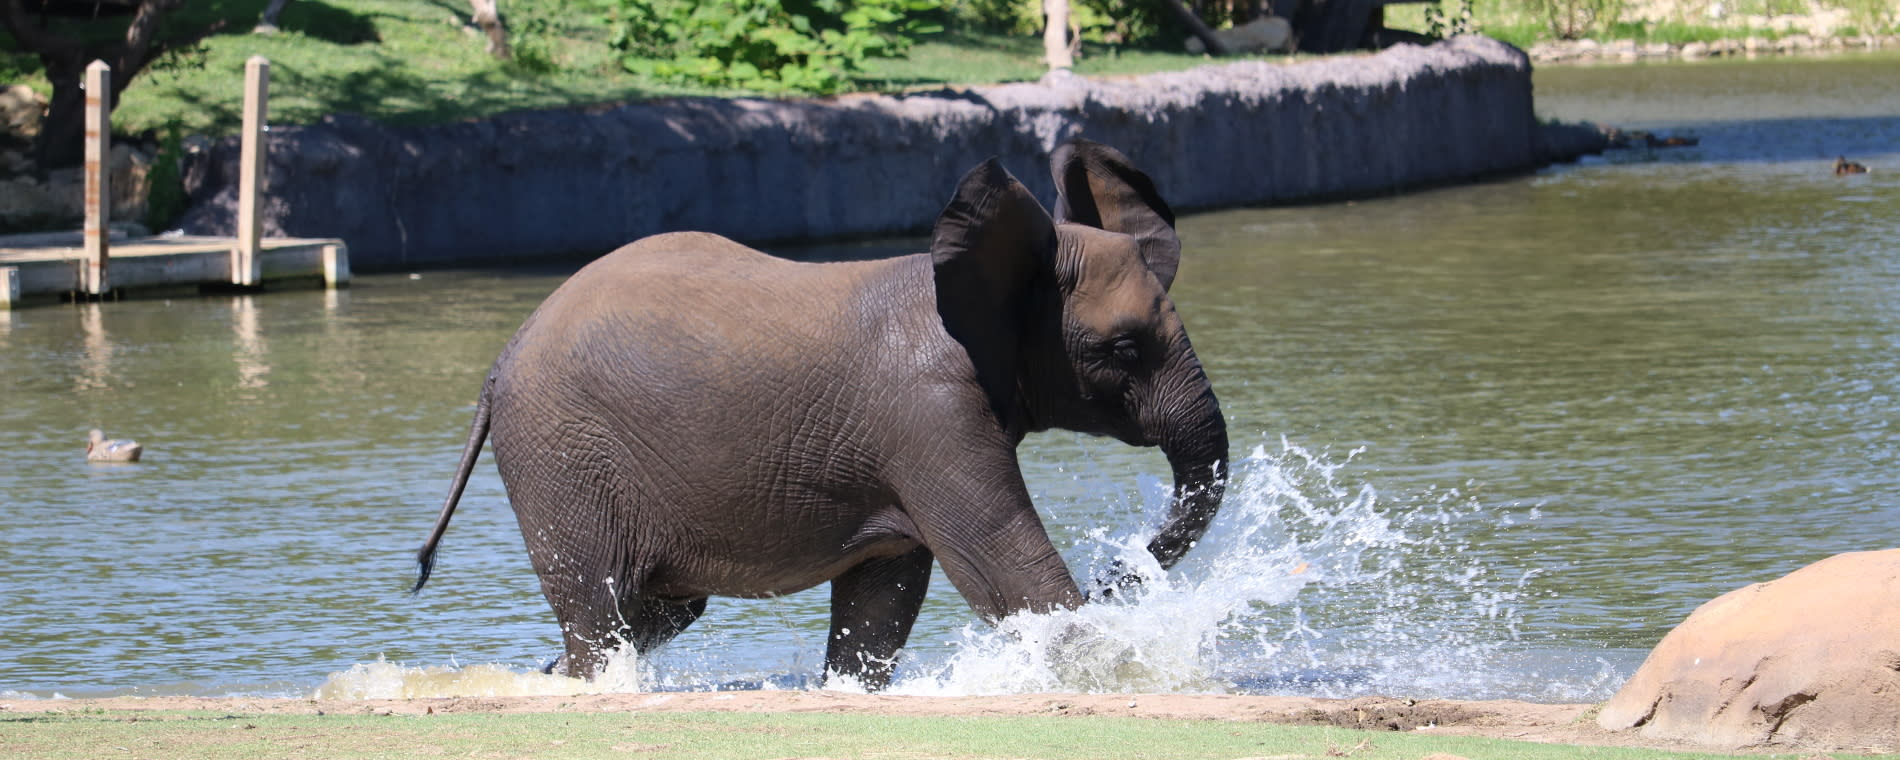 Sedgwick County Zoo Elephant